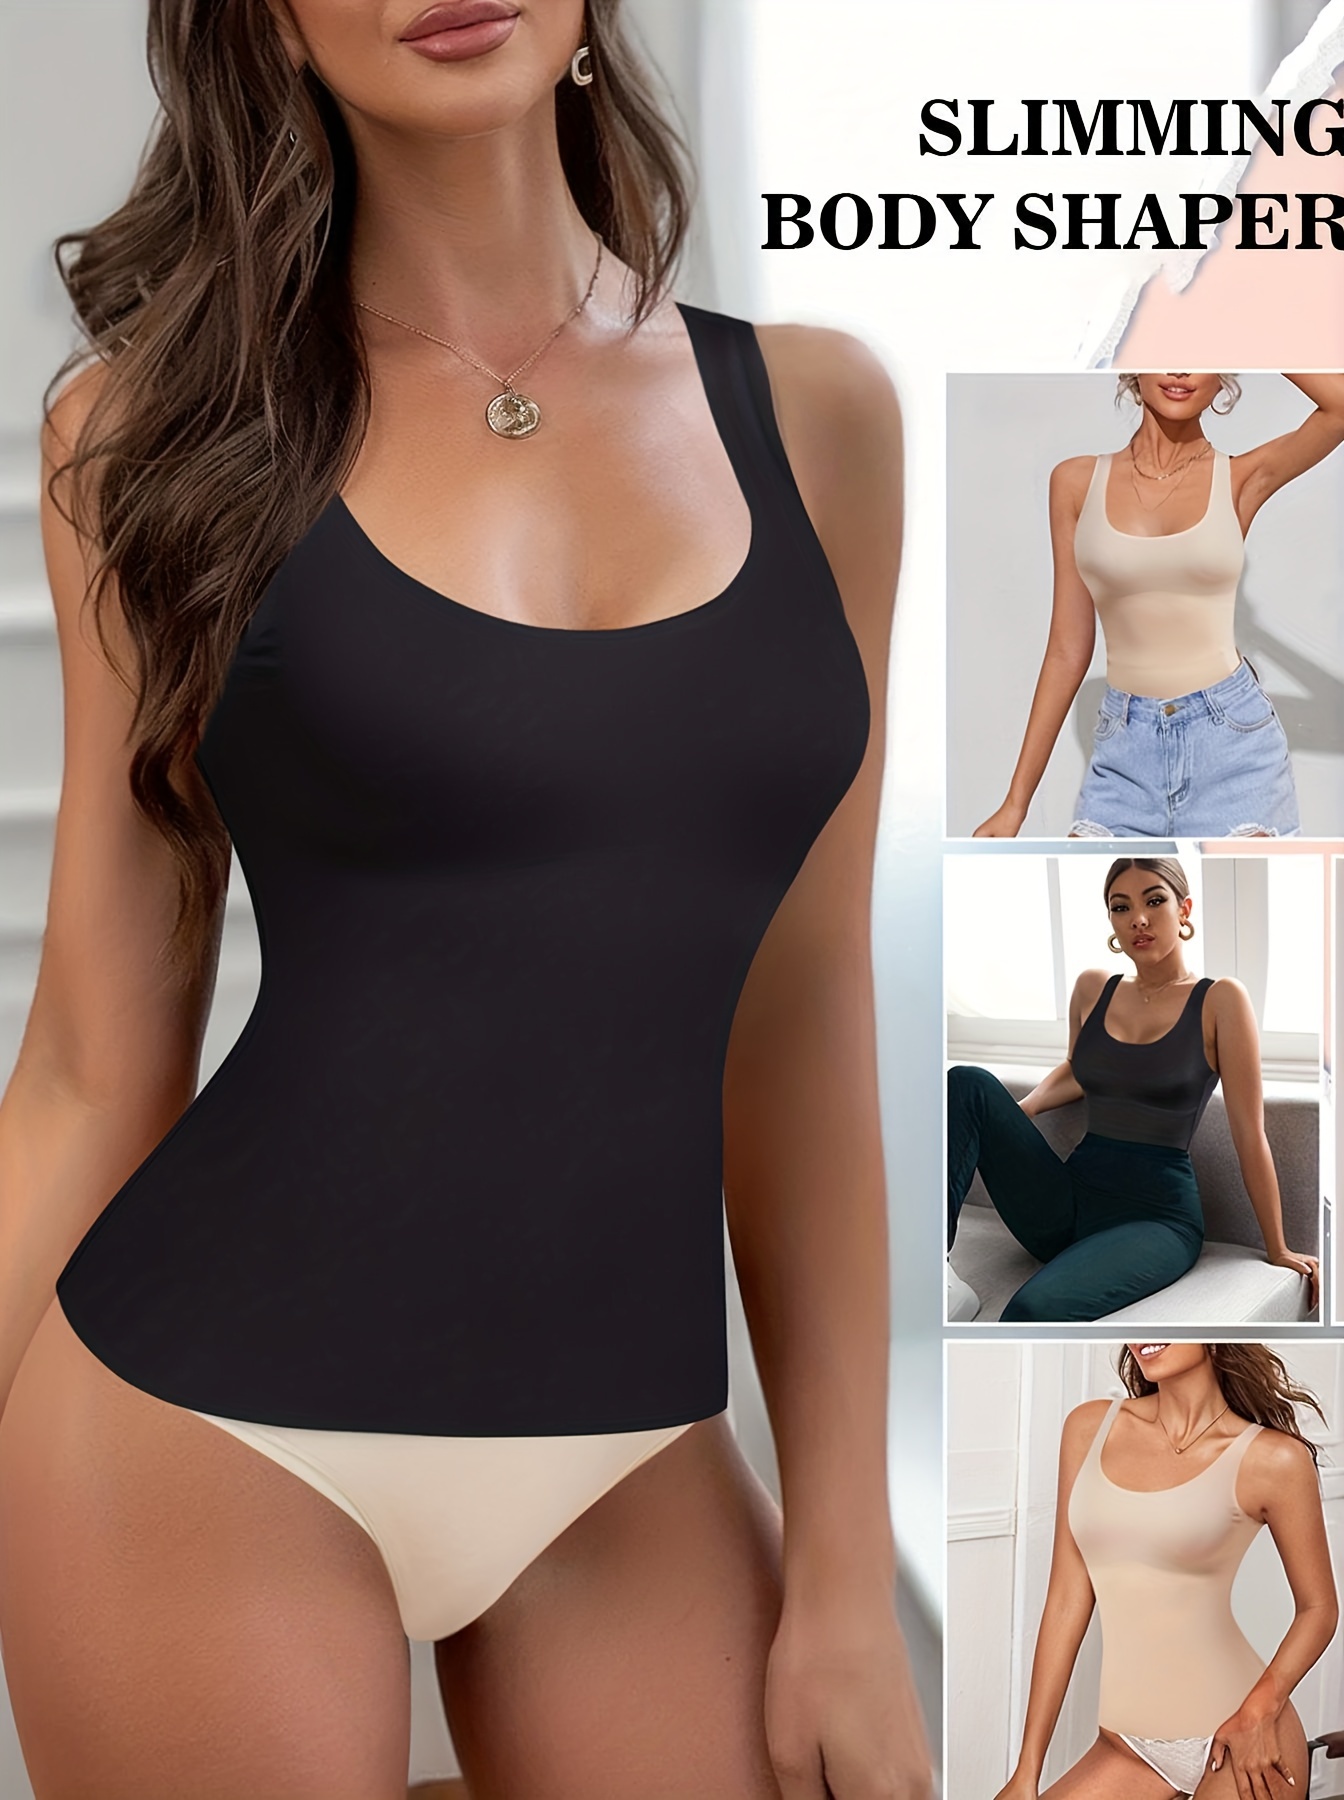 Women Trainer Tummy Control Bodysuit Seamless Top Body Shaper Slimming  Shapewear